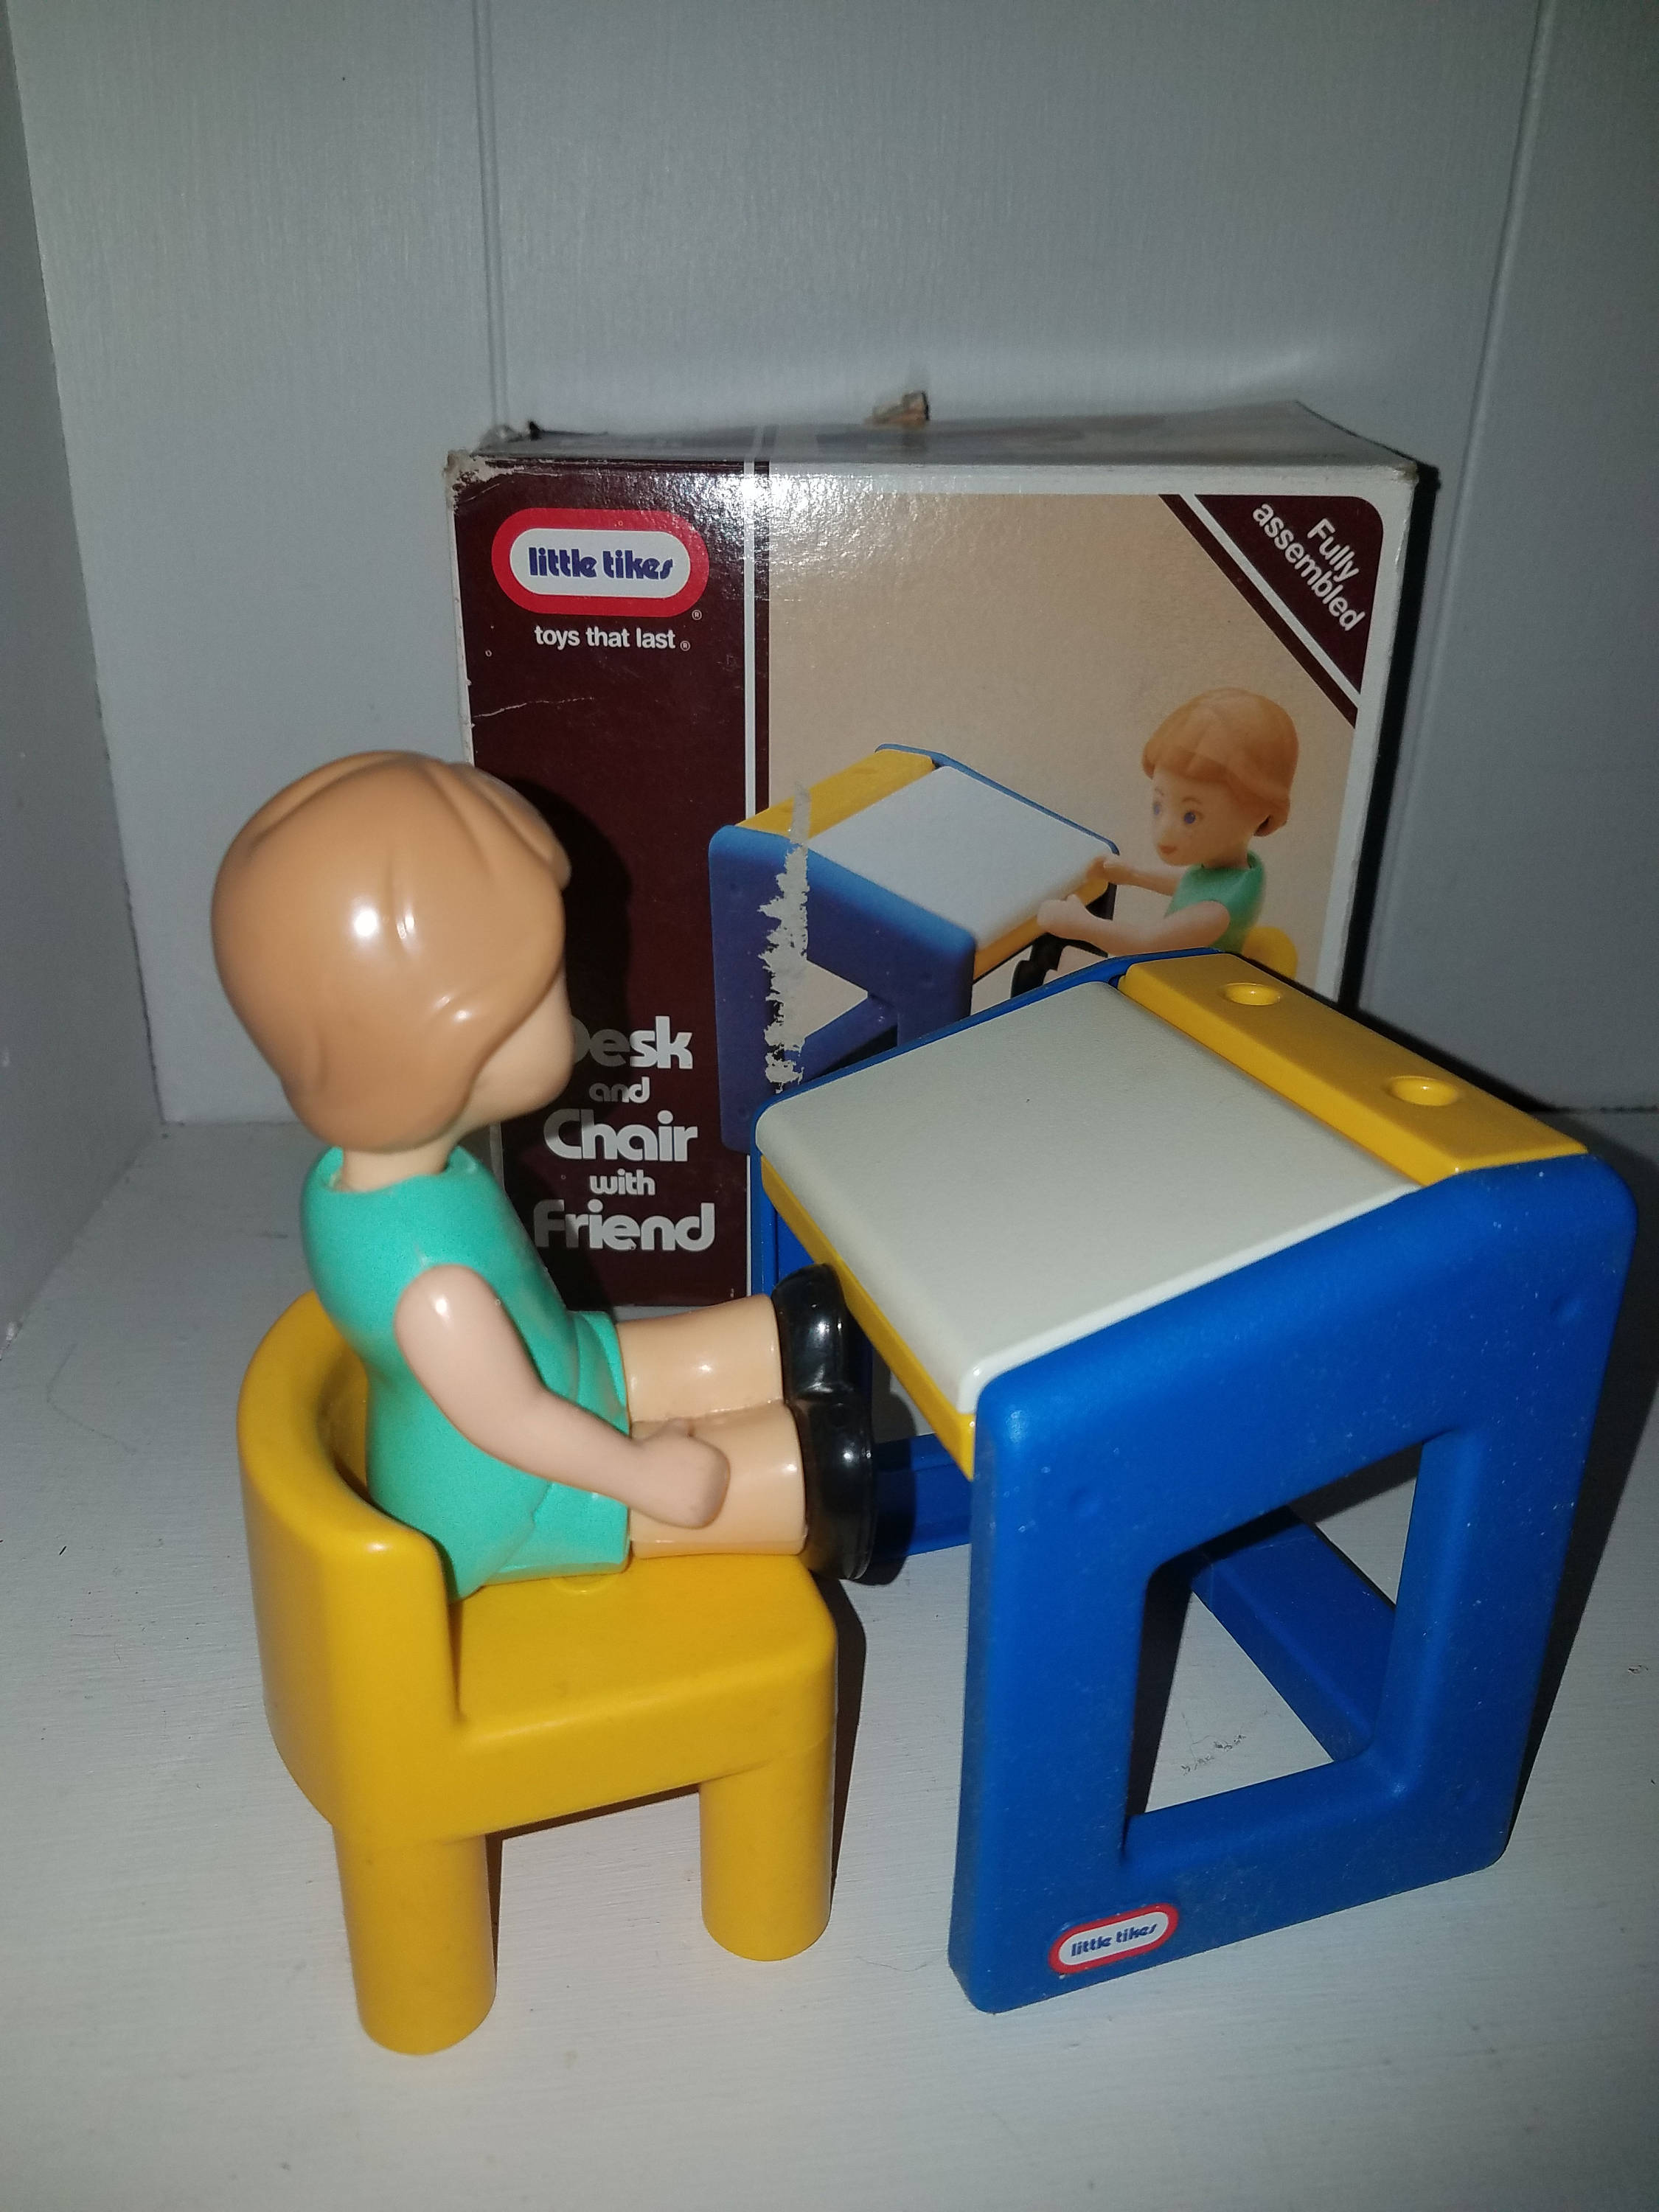 Vintage Little Tikes Dollhouse Size Desk With Chair Friend Etsy